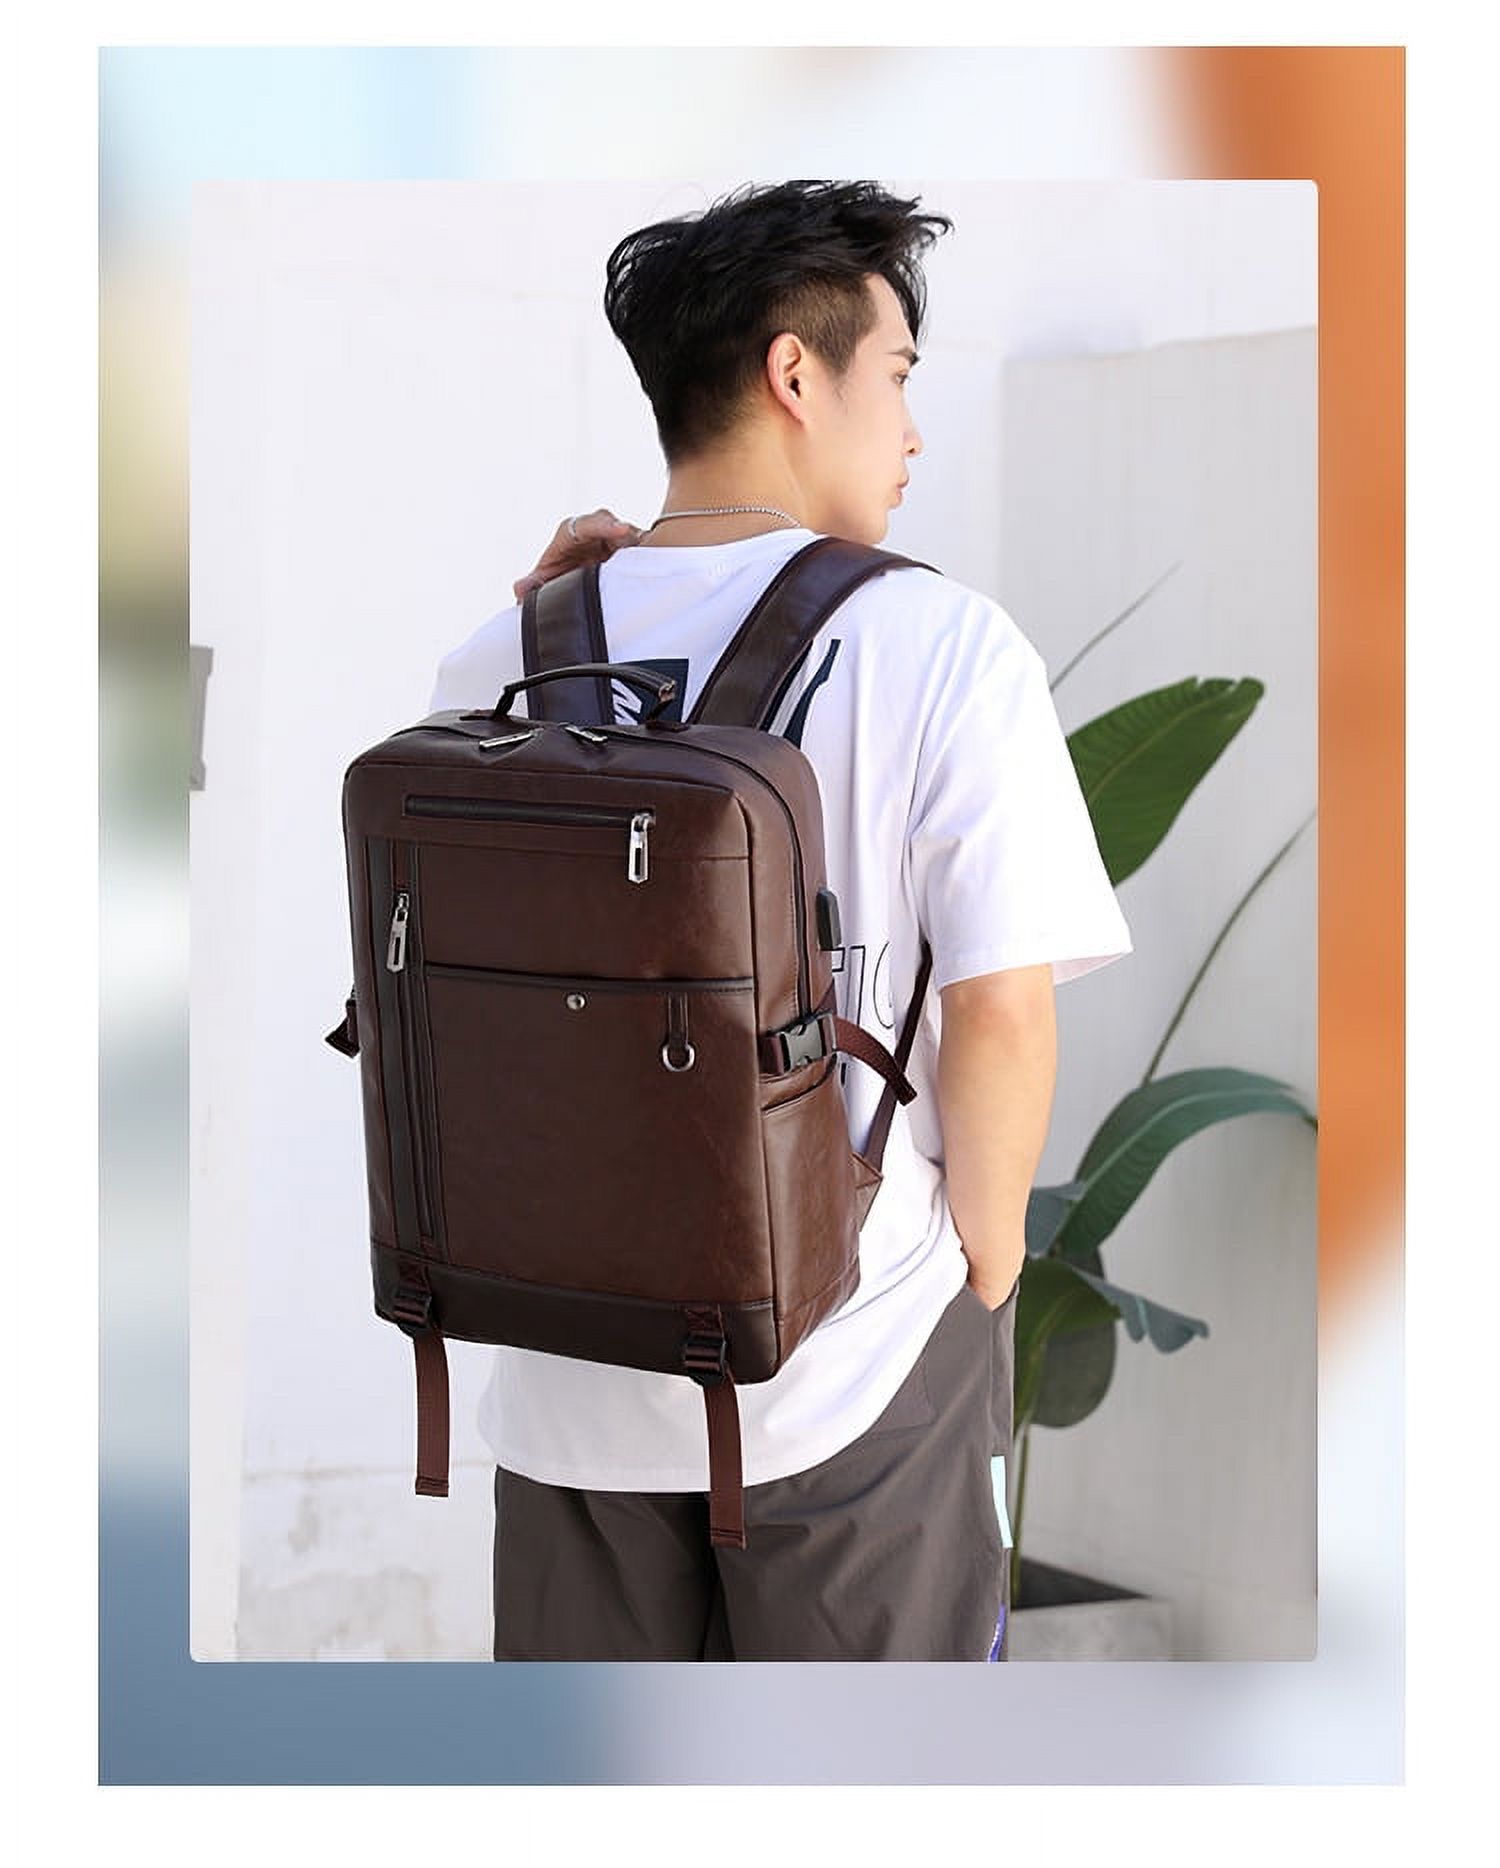 Toyella Summer New Trend Backpack Men's Business Travel Backpack Fashion Computer Bag Khaki - image 4 of 5